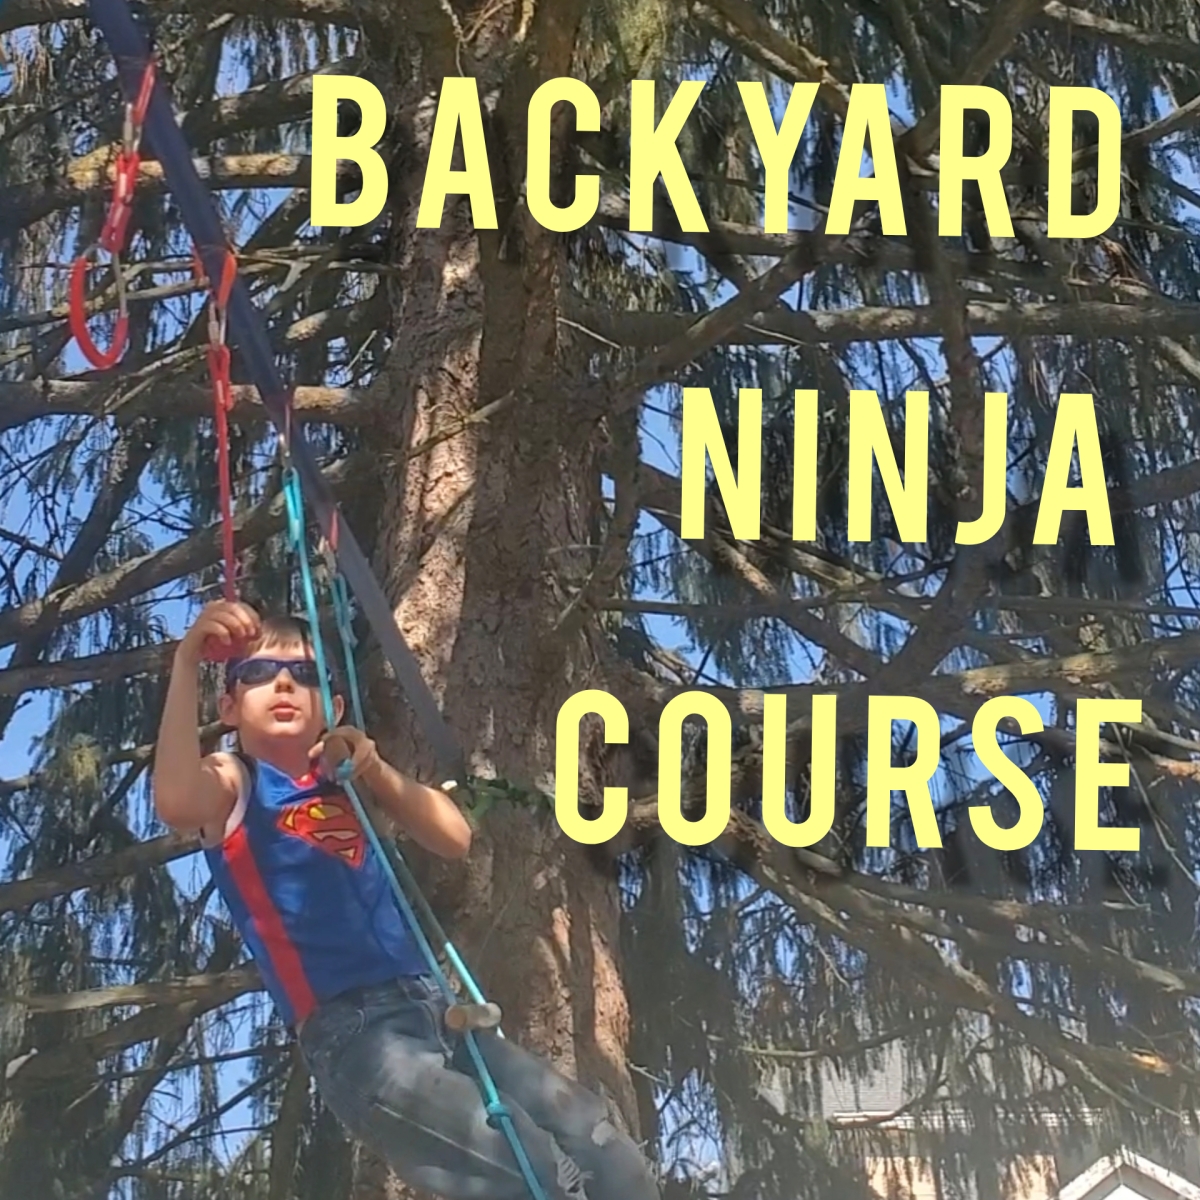 Backyard Ninja Course & More Fun Outdoor Activities!